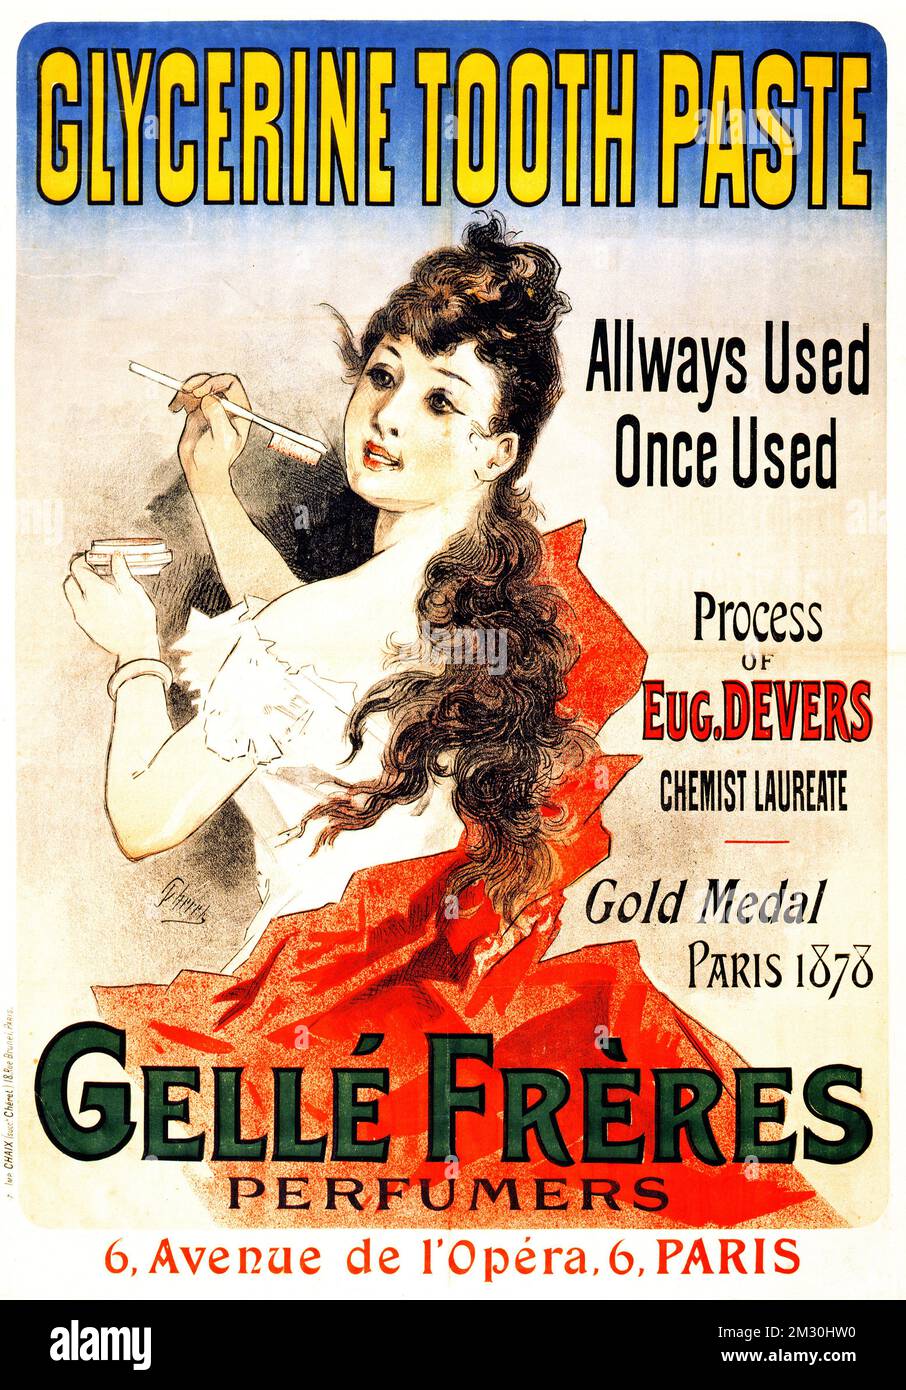 Vintage advertising poster - Glycerine tooth paste - Gellé Frères perfumers 6, Avenue de l'Opéra, 6, Paris - Jules Chéret - 1889 Stock Photo